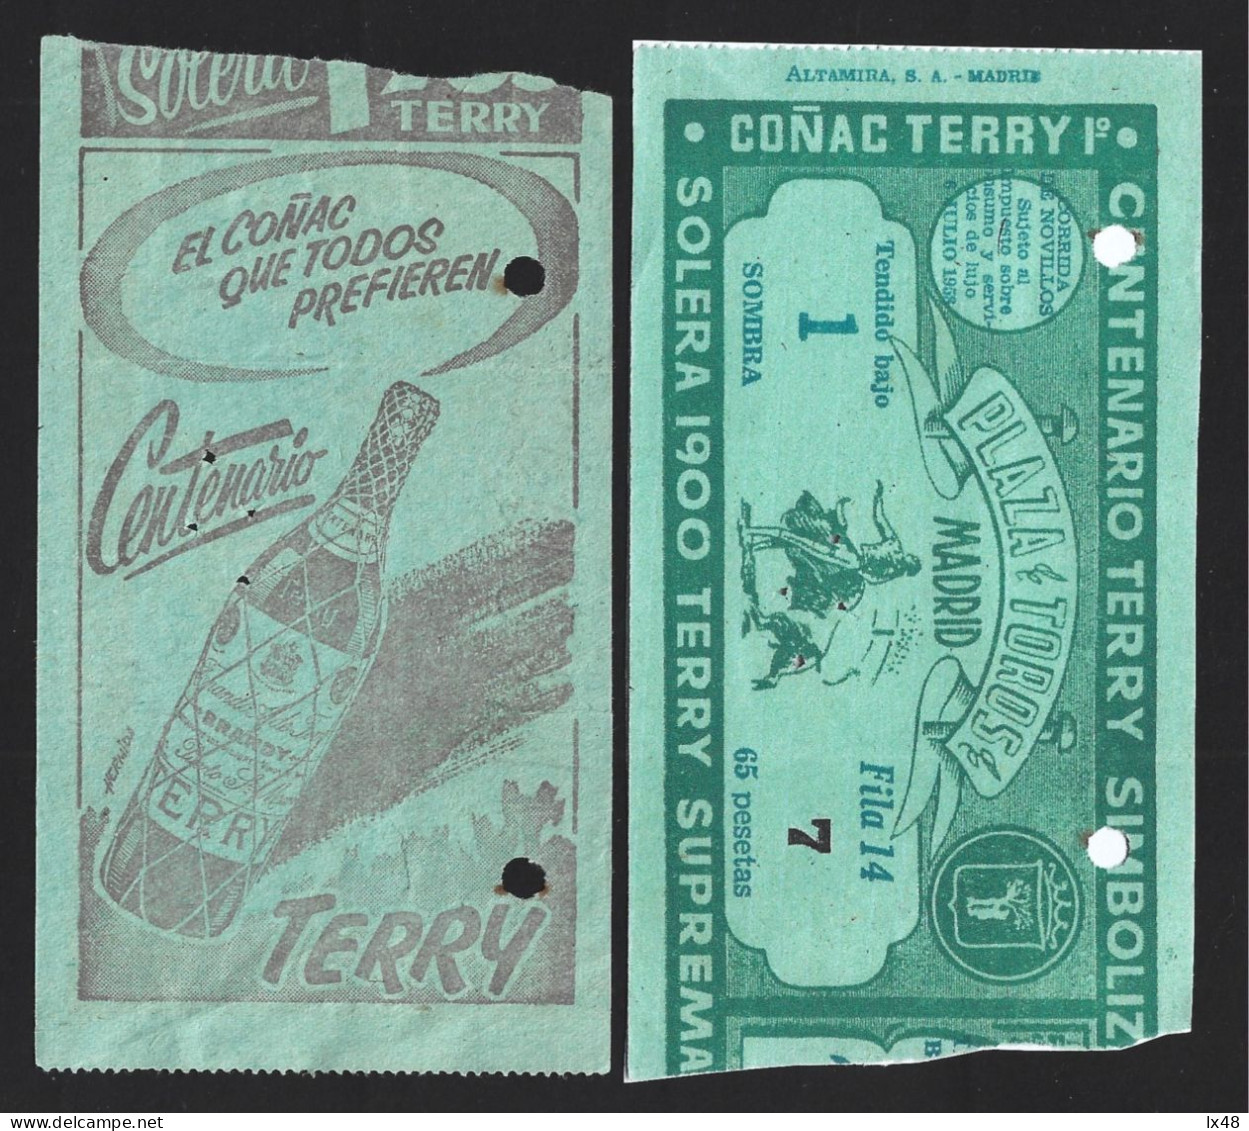 Terry Cognac. 100 Years Of Terry Cognac. To Drink. Trinken. Terry. Conac. Entrance Ticket To The Plaza De Toros In Madri - Drank & Bier